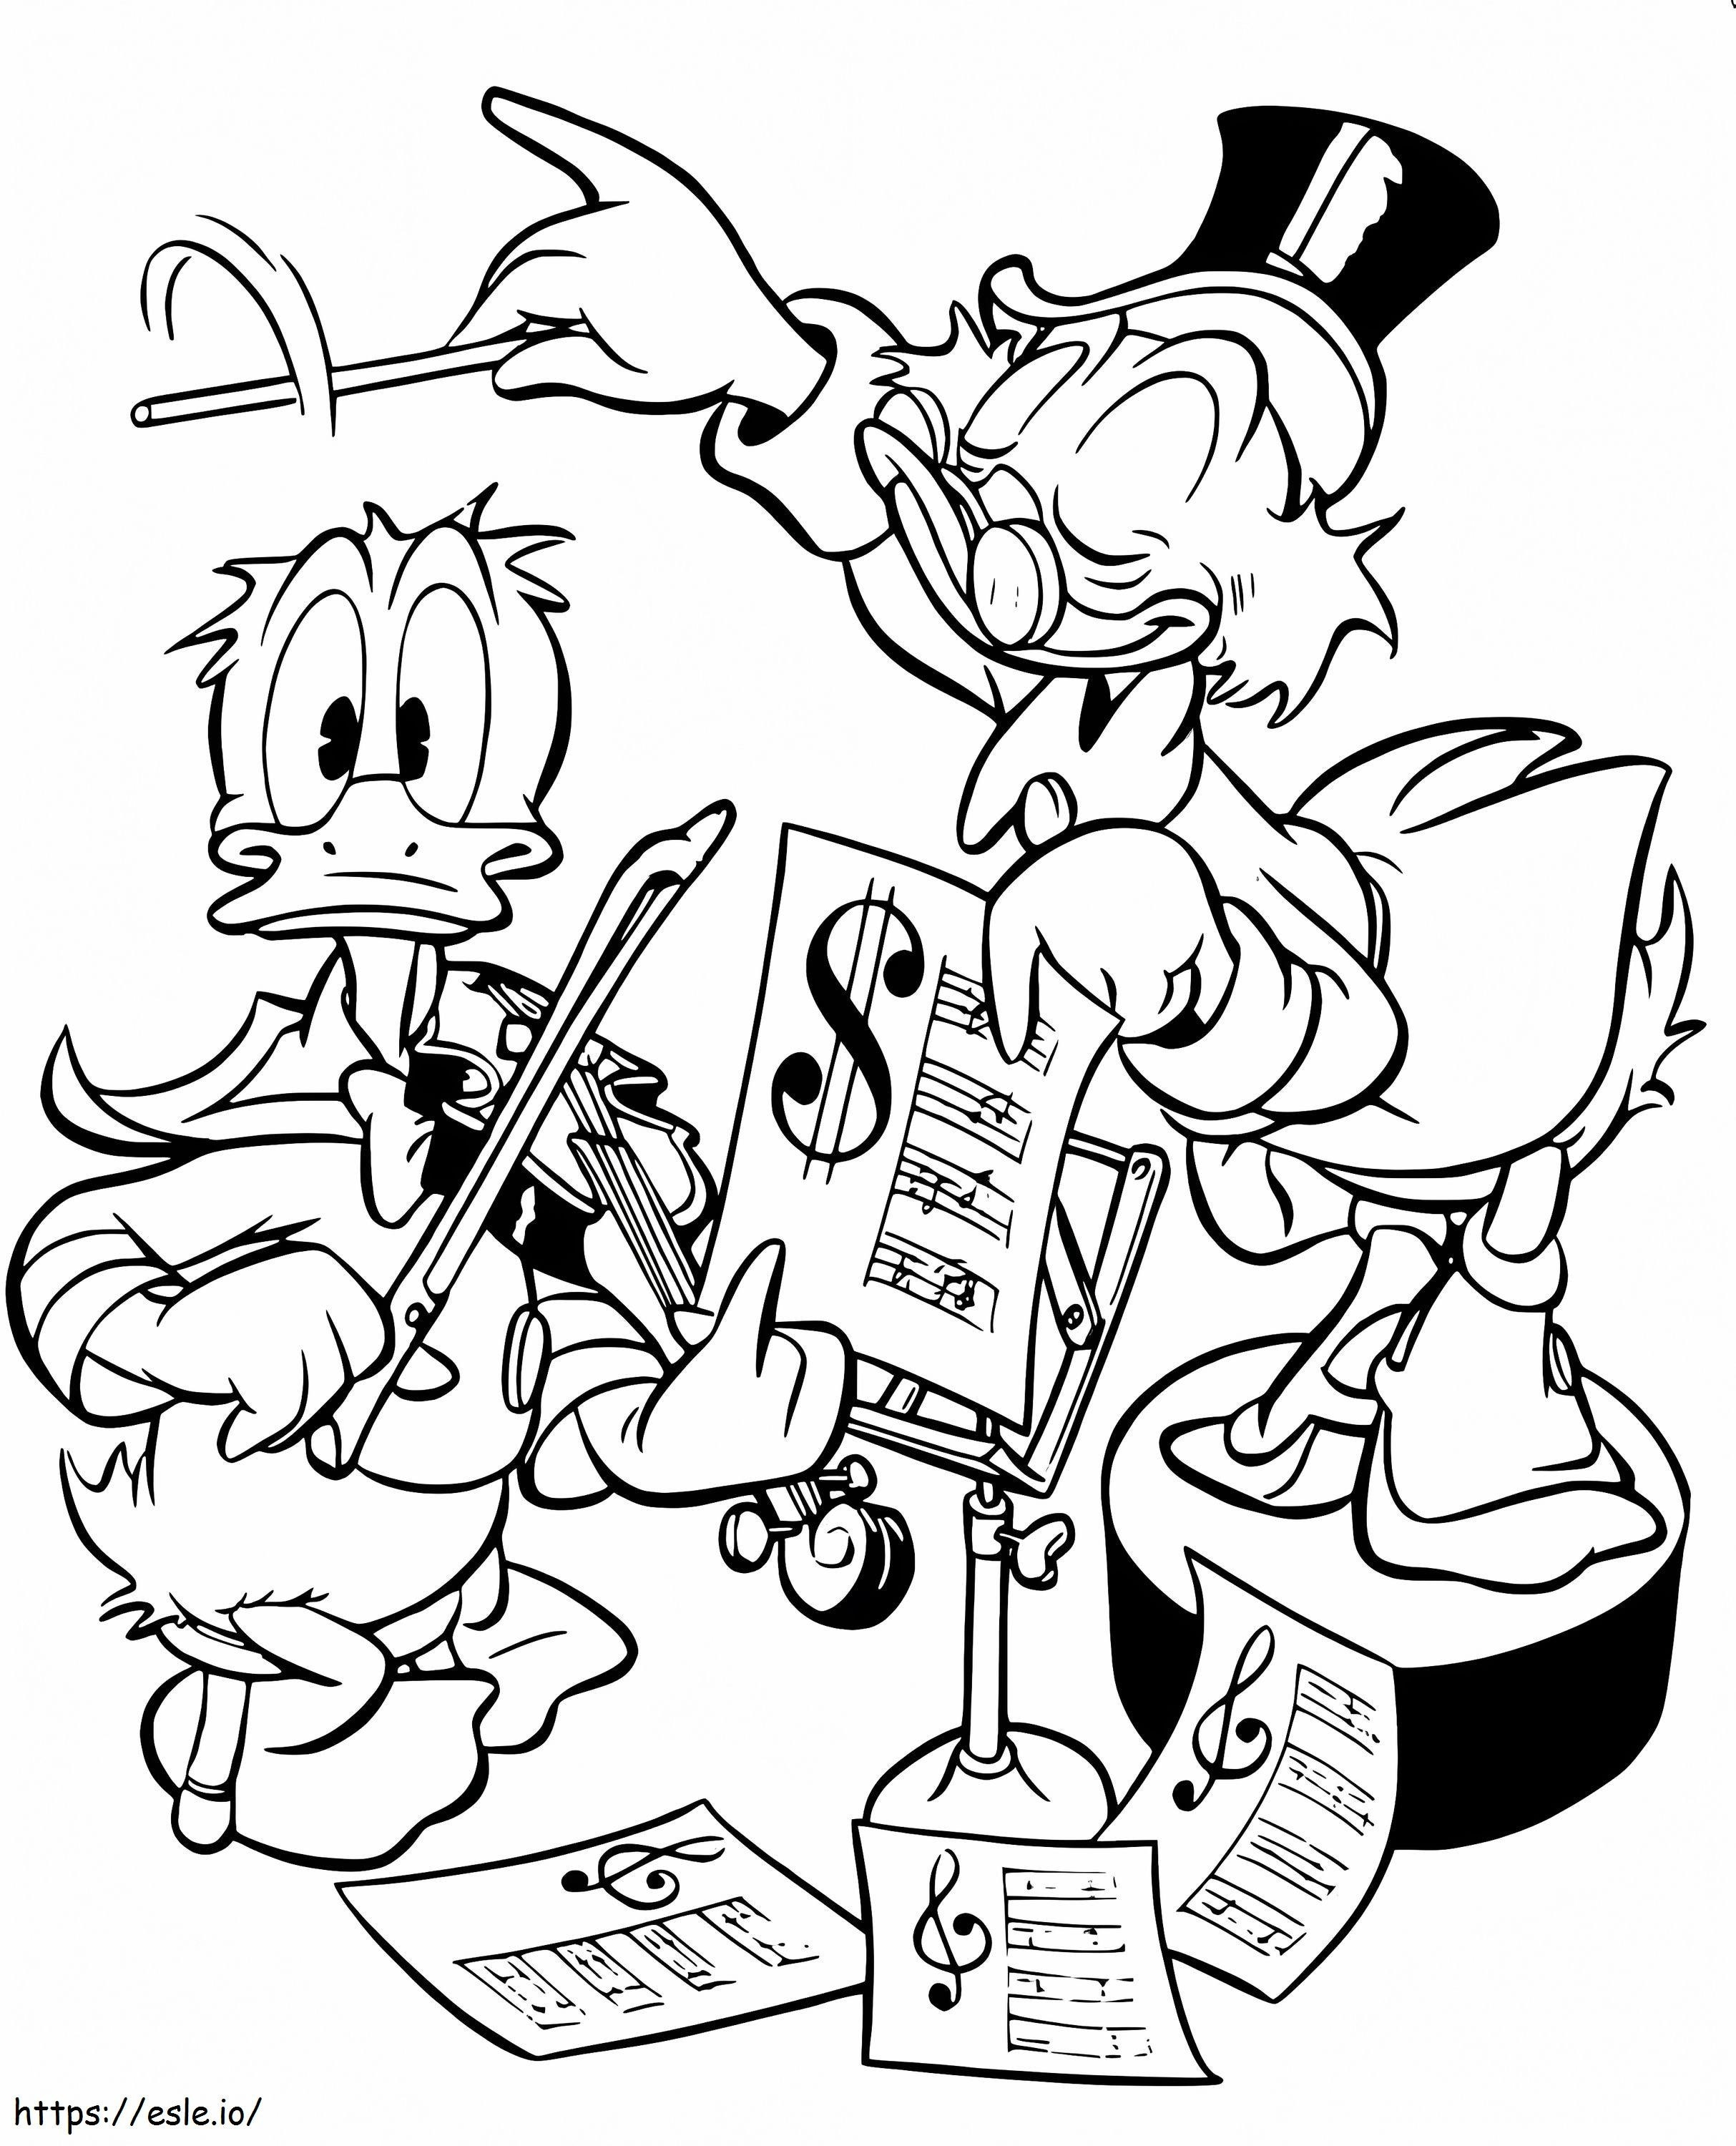 Donald ve Scrooge McDuck boyama